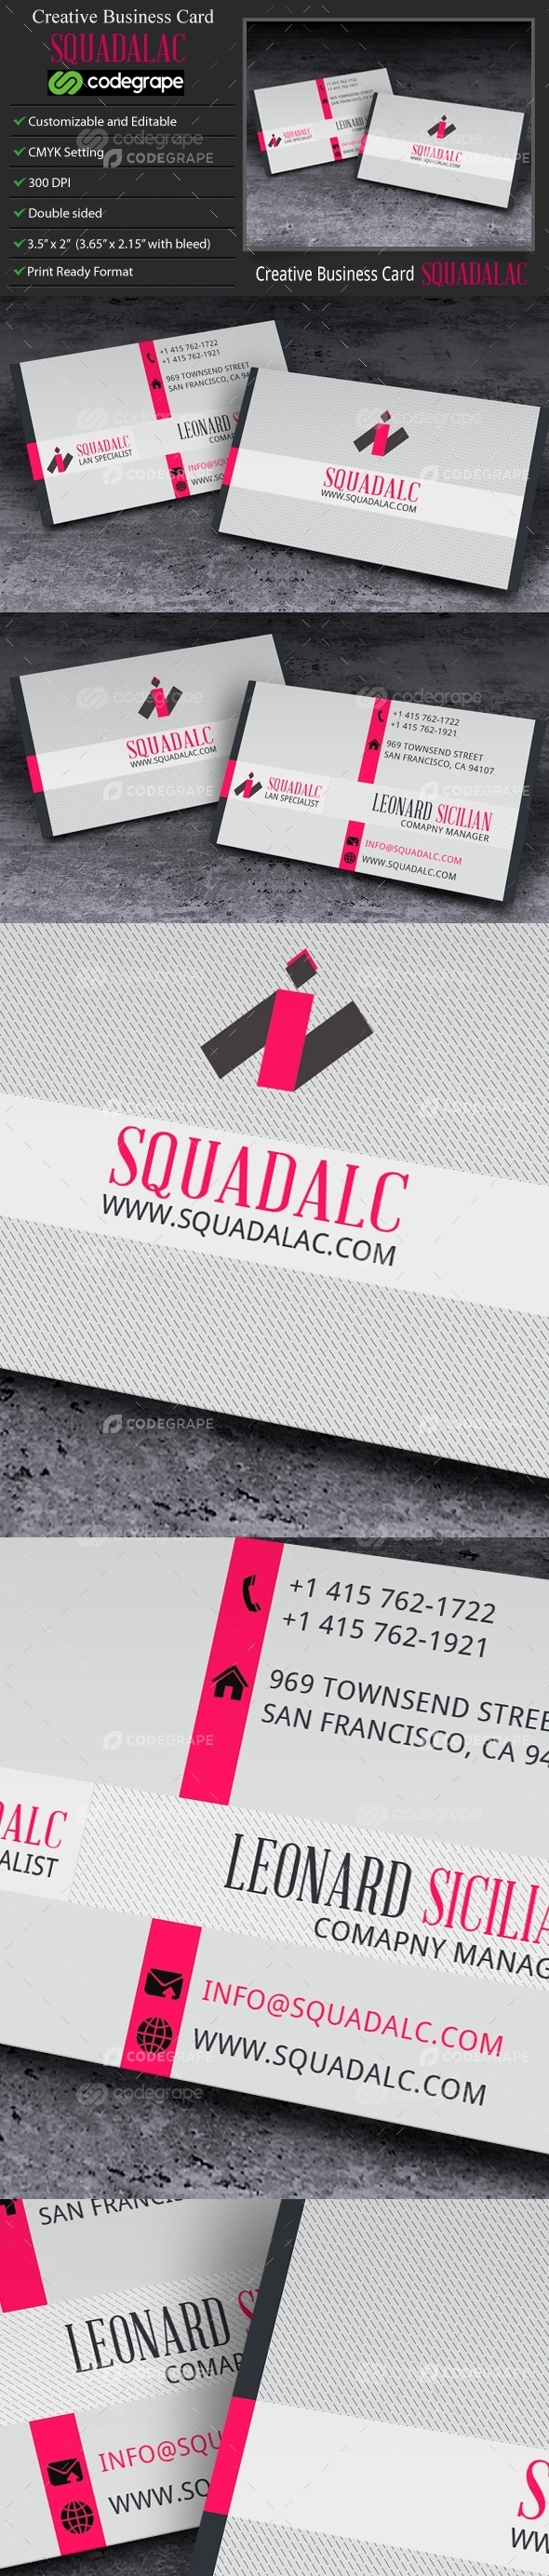 Modern Creative or Corporate Business Card - Squadalac